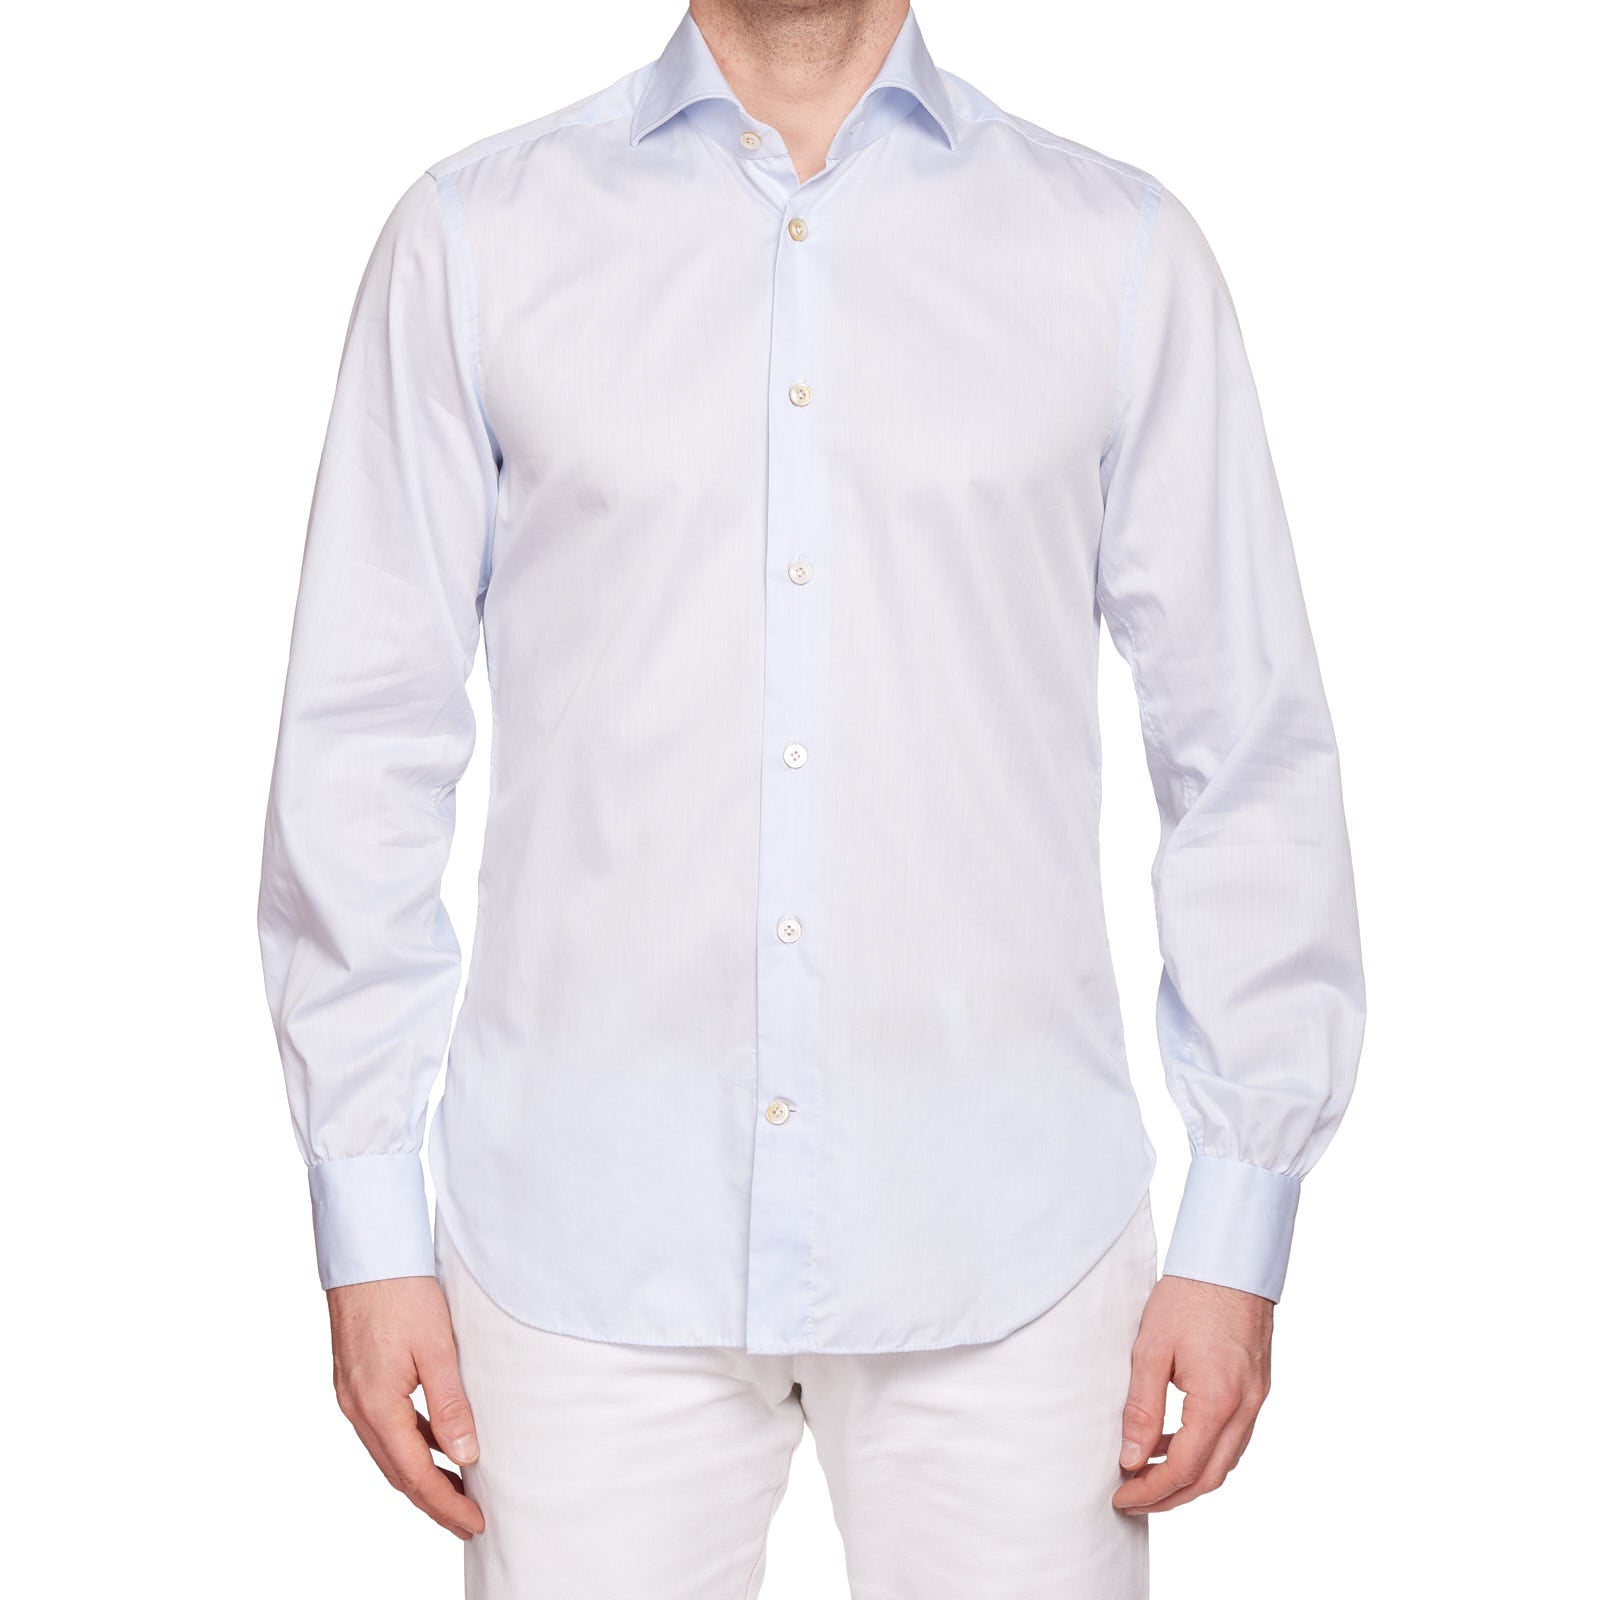 KITON Napoli Handmade Bespoke Light Blue Twill Cotton Dress Shirt EU 40 NEW US 15.75 KITON